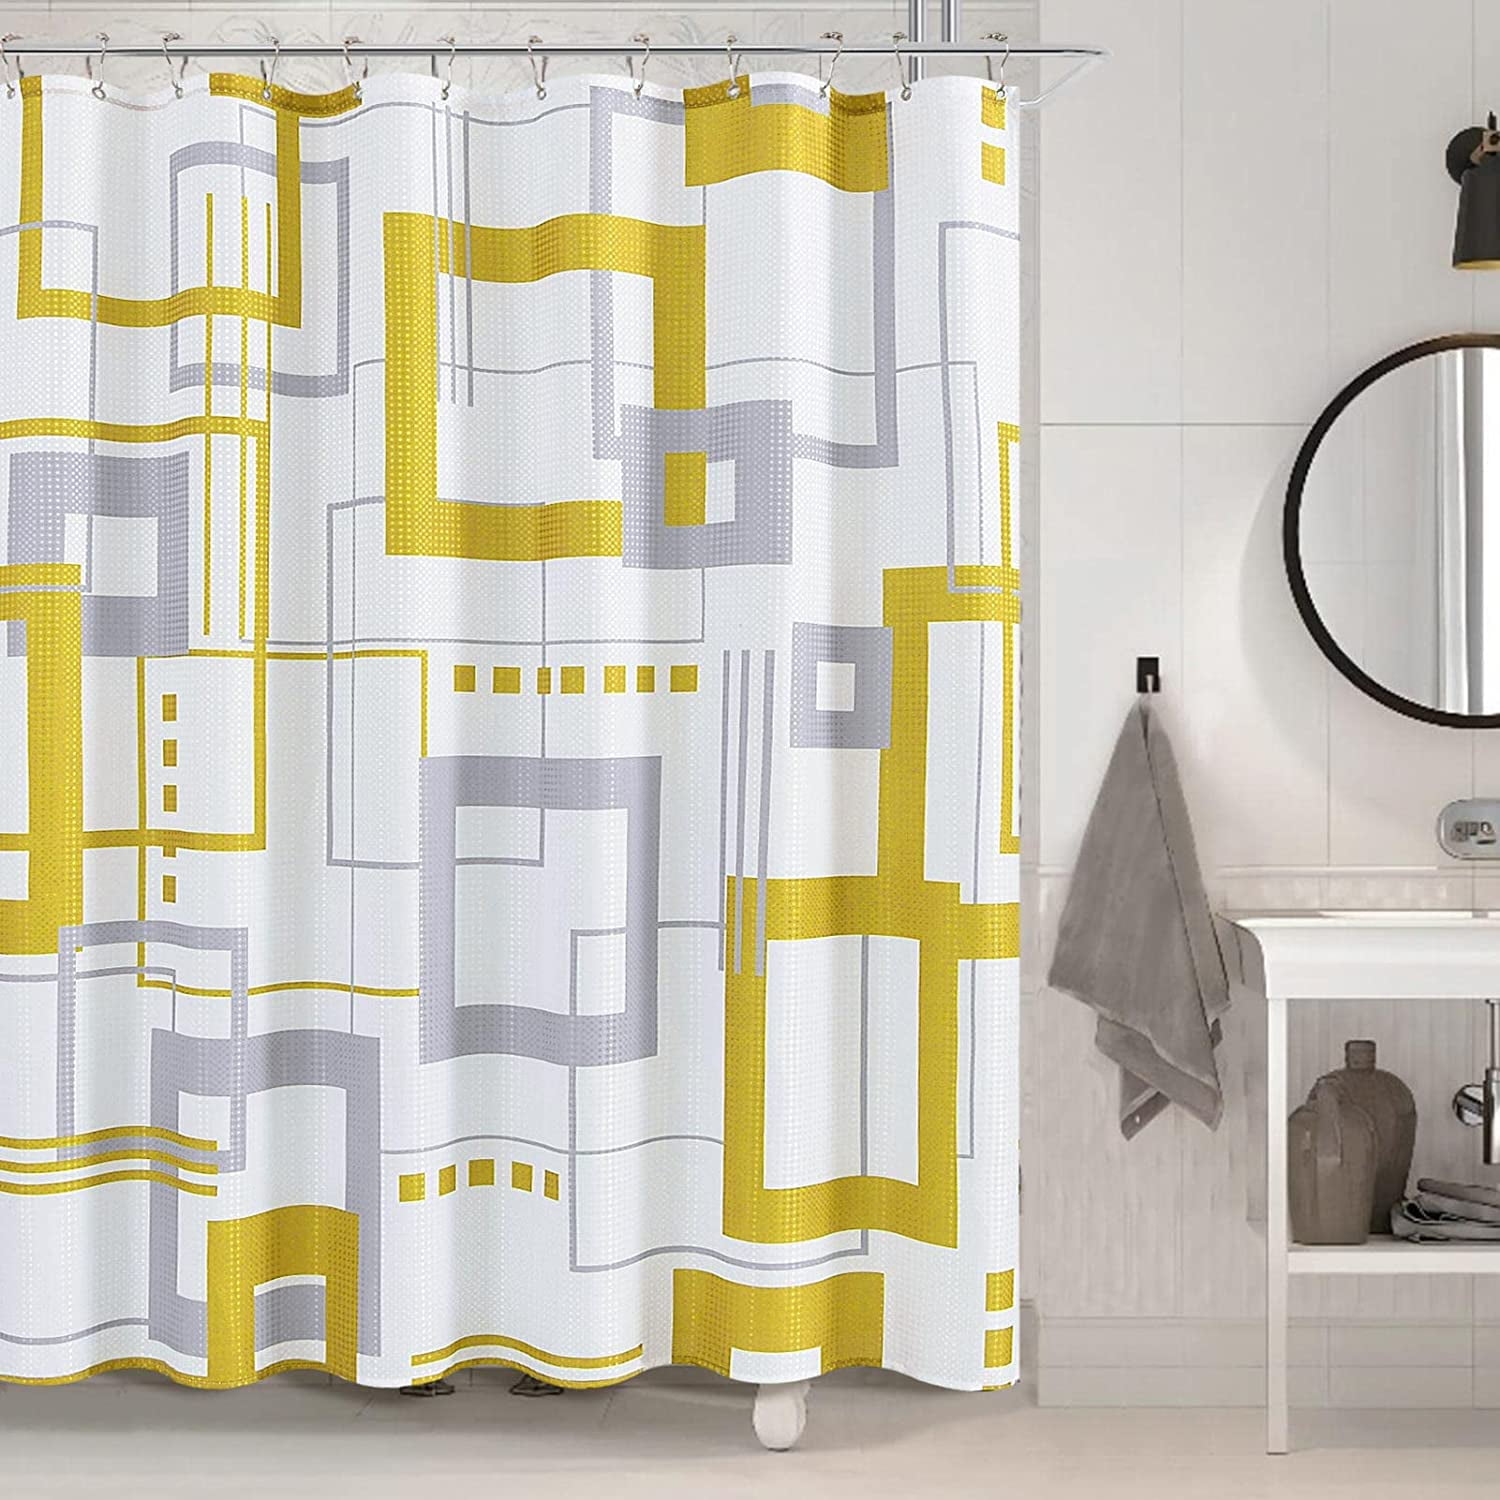 Gelbchu Gray Yellow Stall Half Fabric Shower Curtain W 36 x H 72